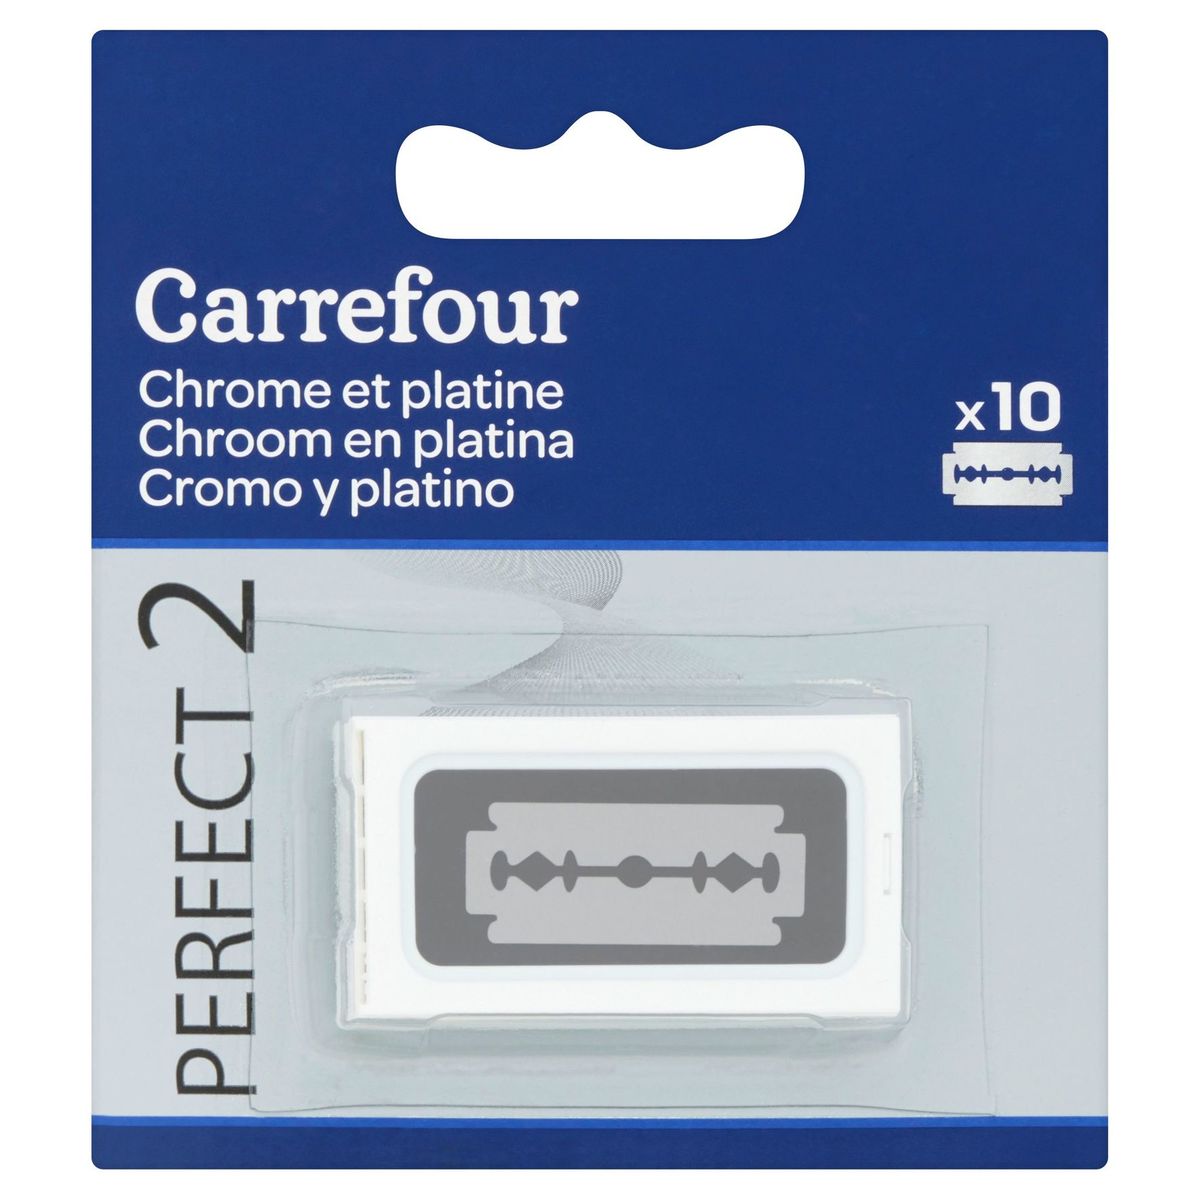 Carrefour Perfect 2 Chroom en Platina 10 Vervangmesjes